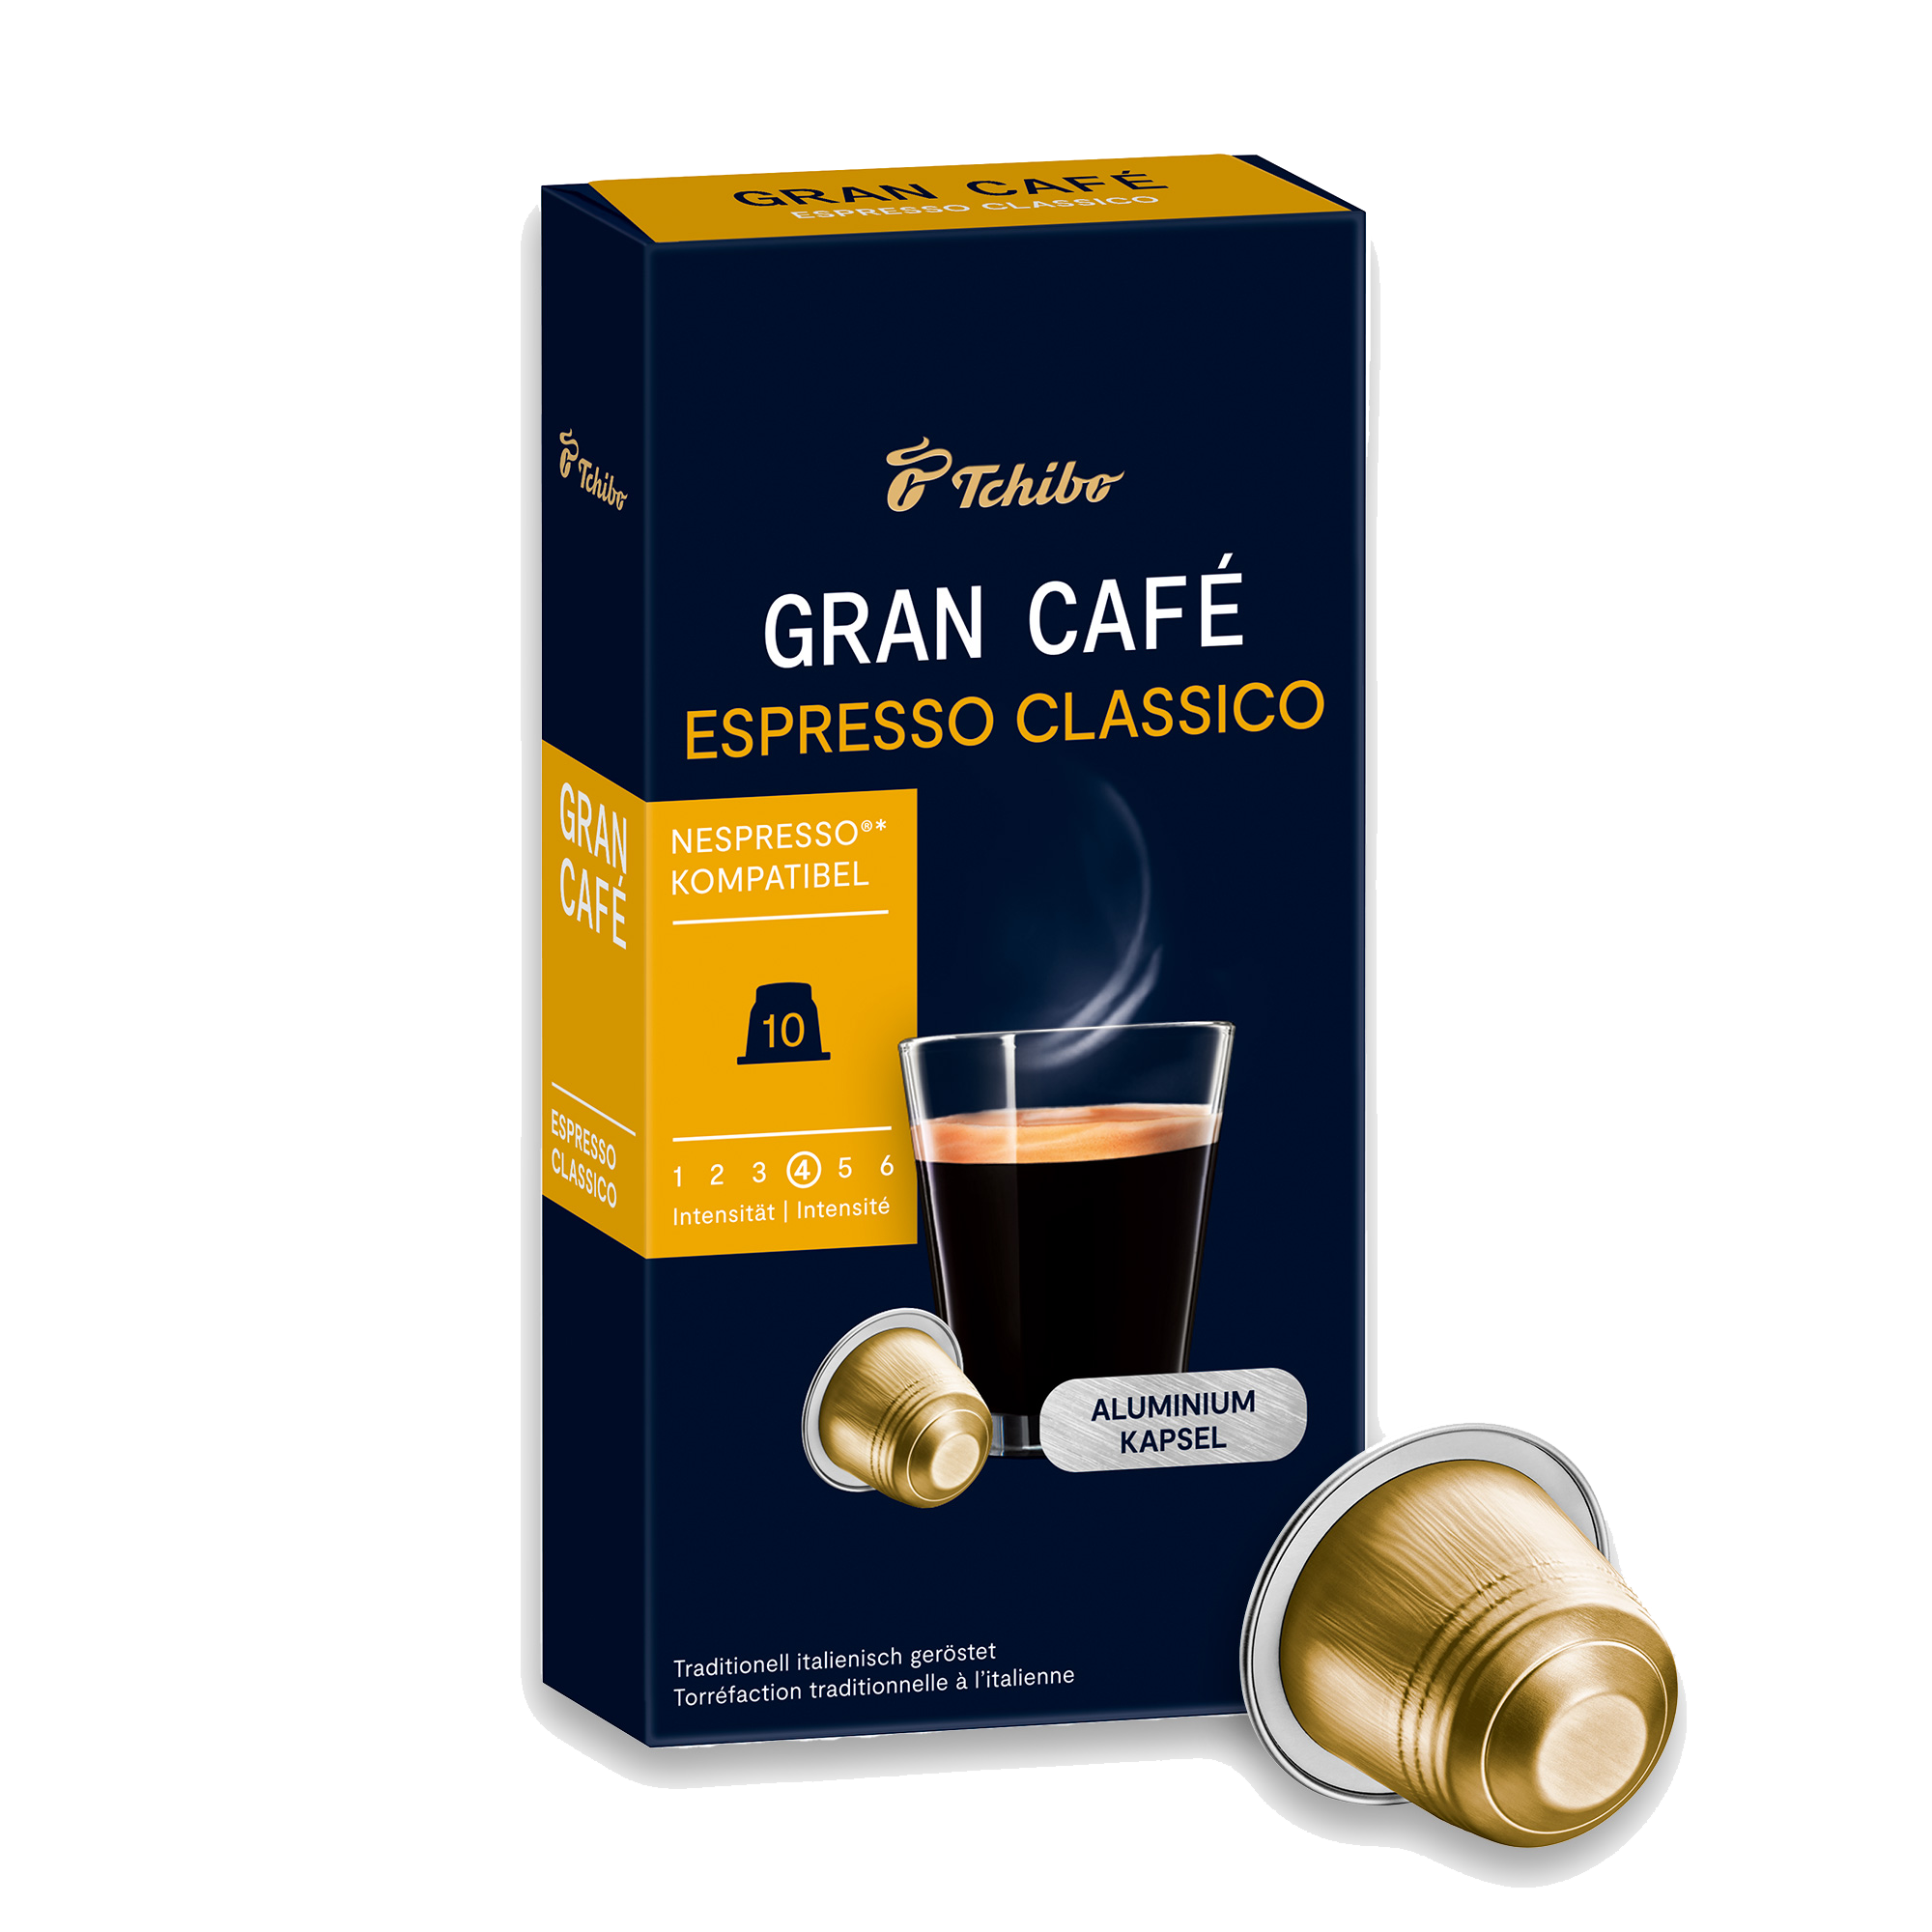 Gran Café Espresso Classico